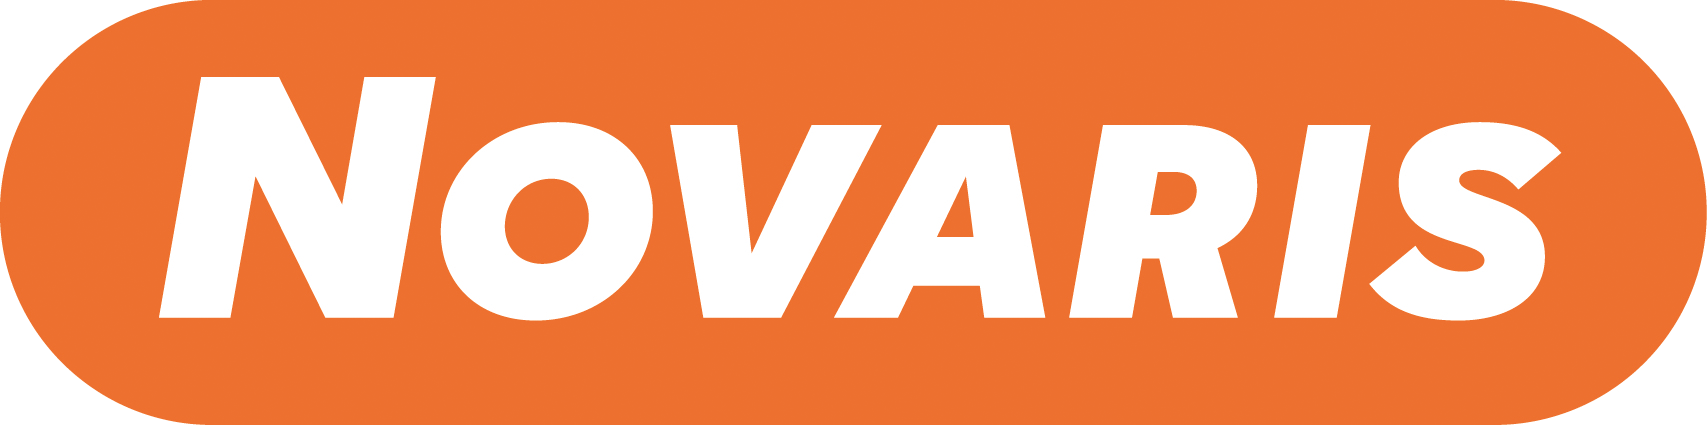 Novaris Logo Orange copy